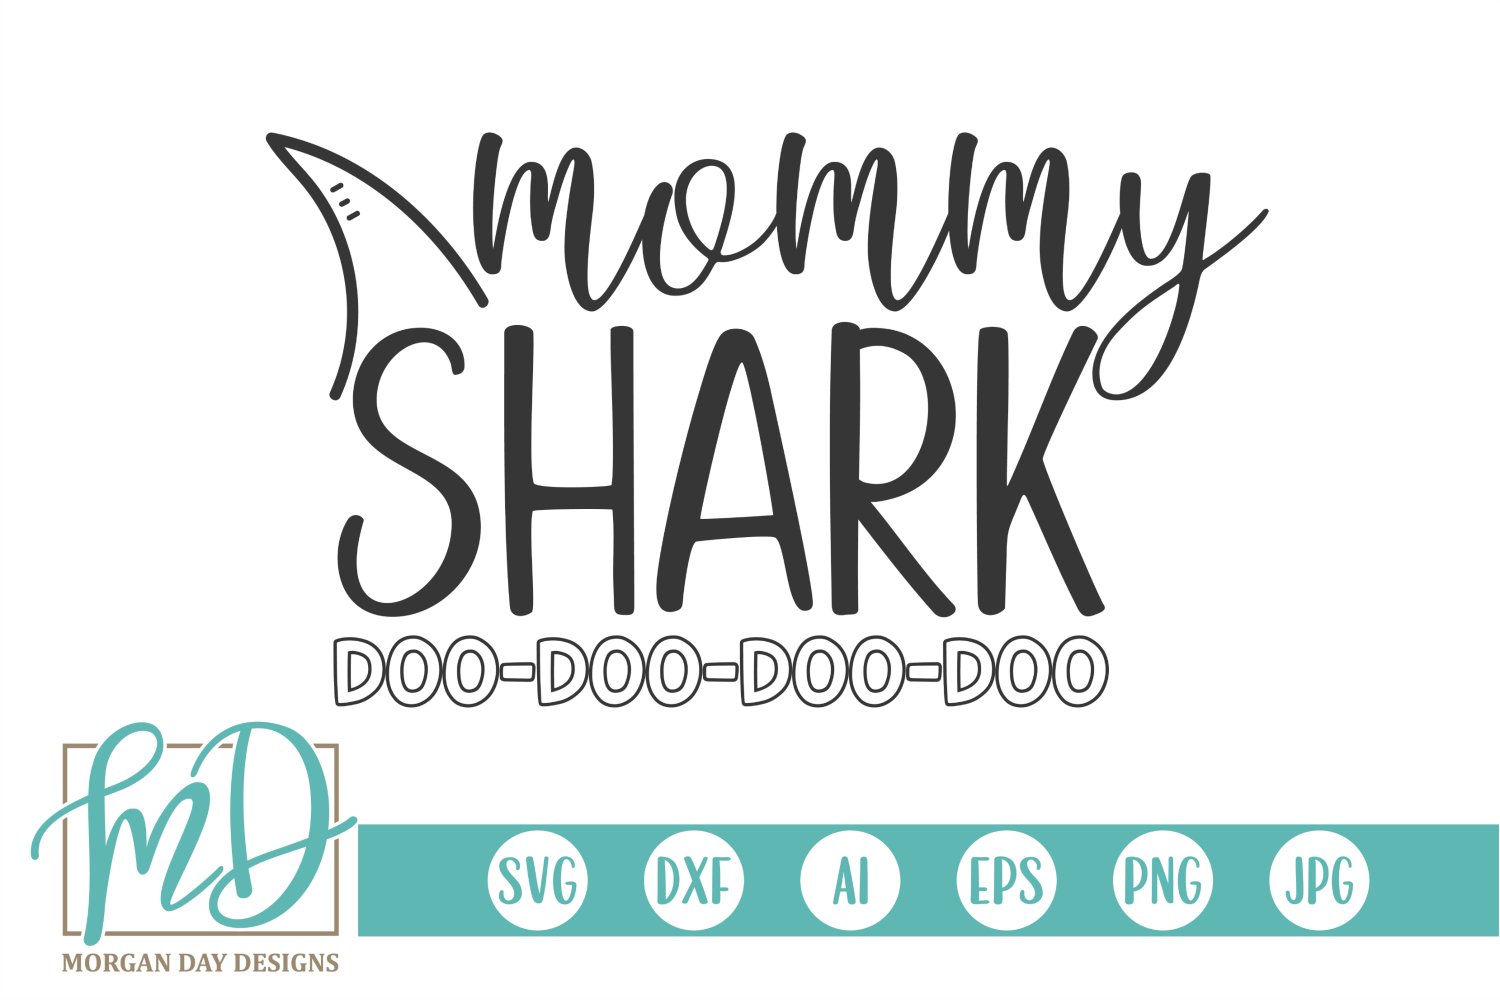 Mommy Shark SVG